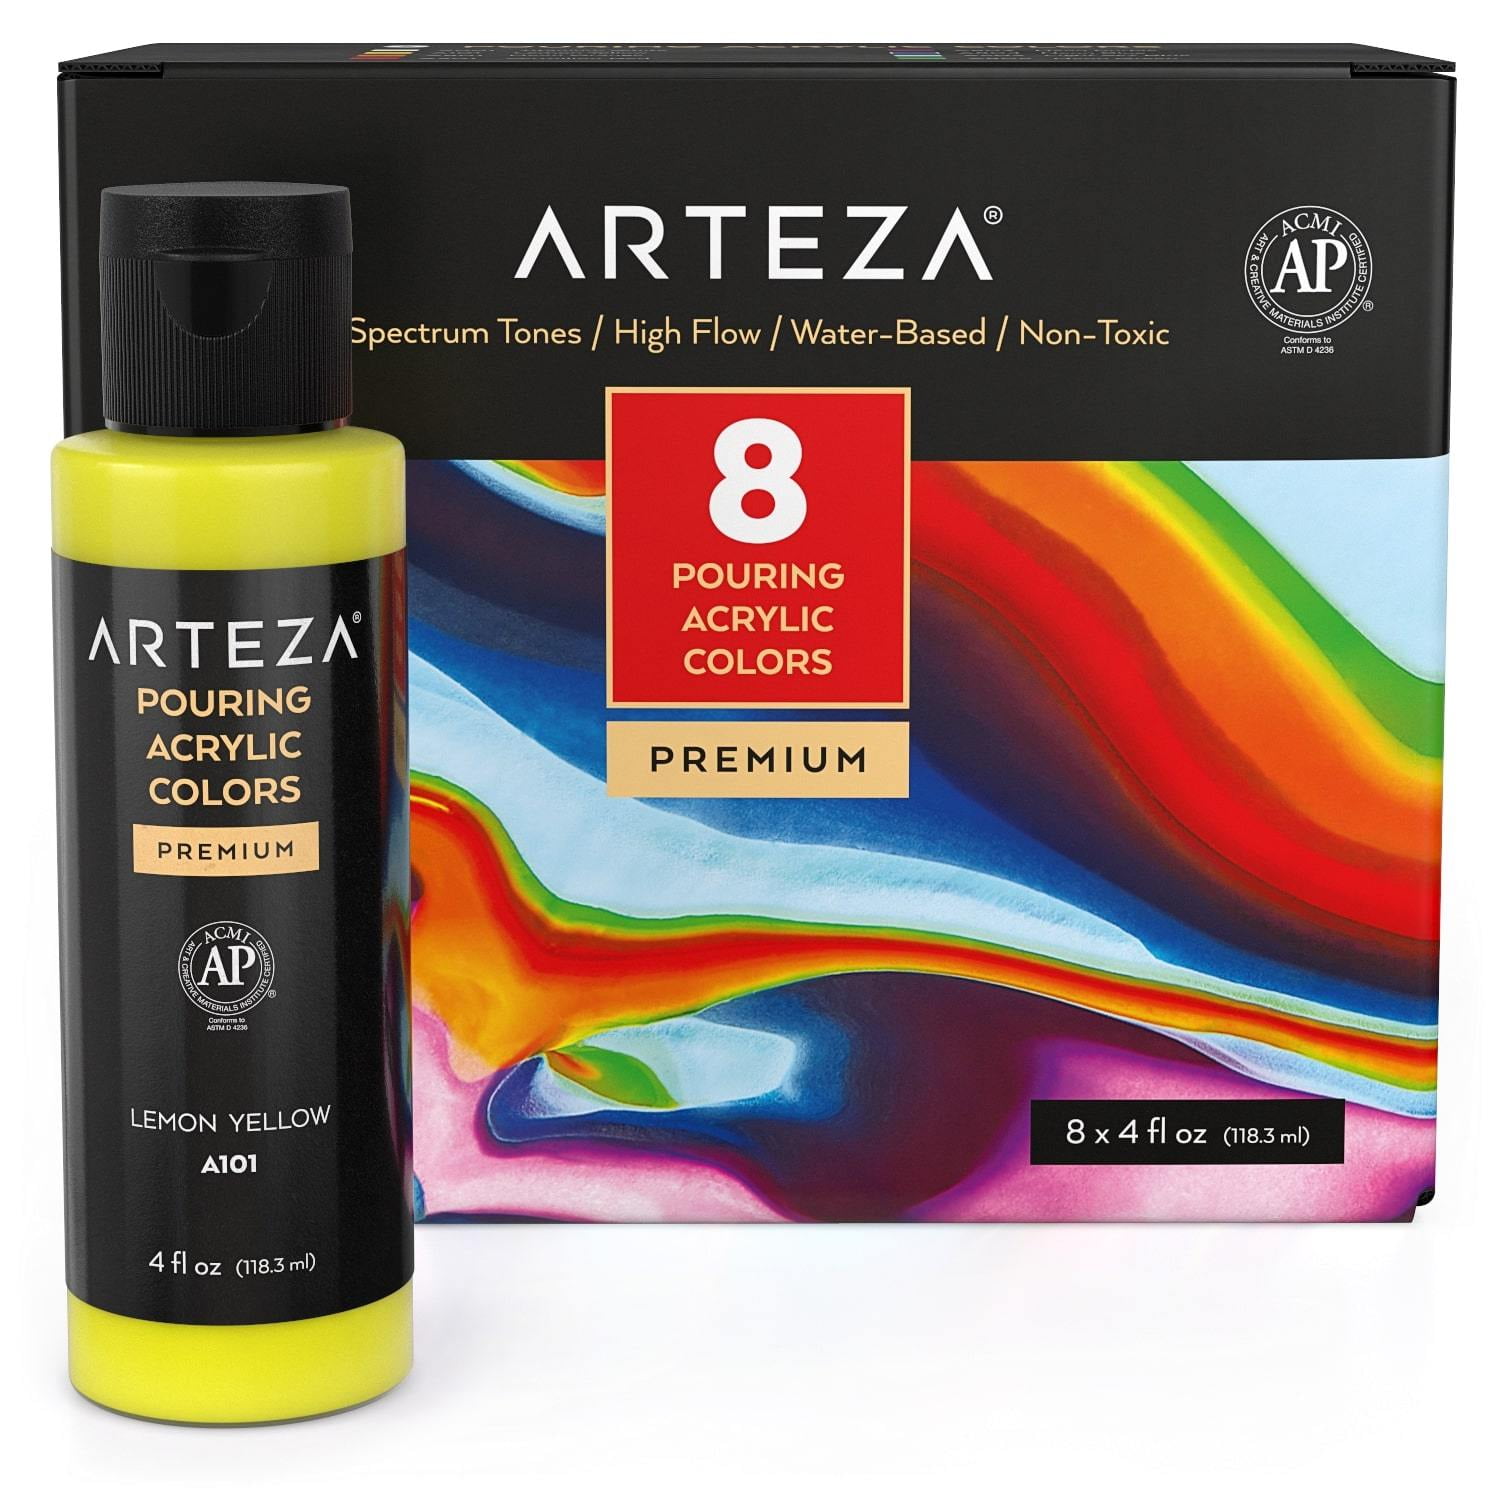 Arteza Pouring Acrylic Paint, Iridescent Vibrant Tones, 4oz Bottles - Set of 4